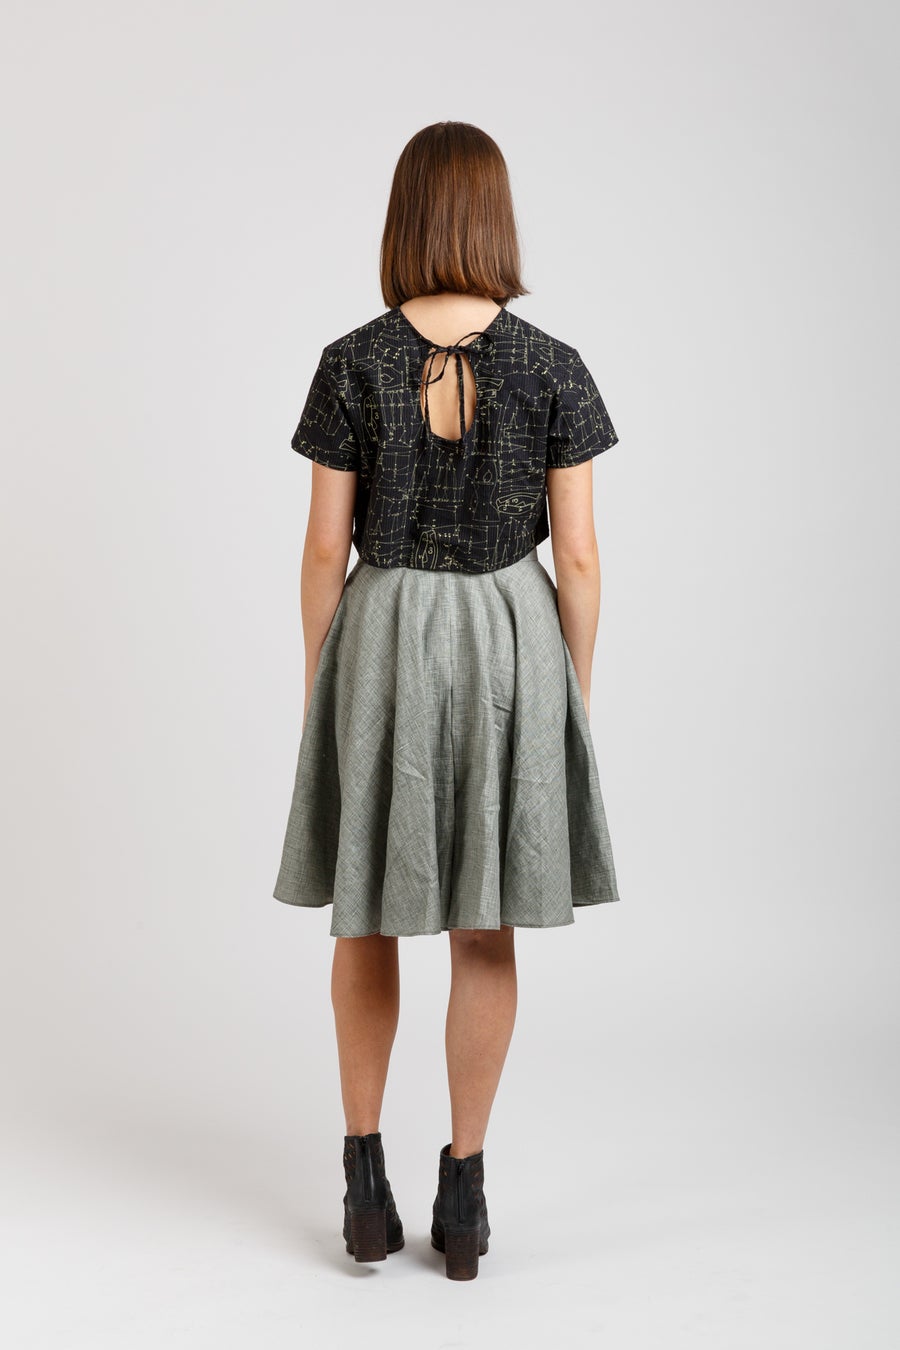 Megan Nielsen - Tania Culottes Sewing Pattern